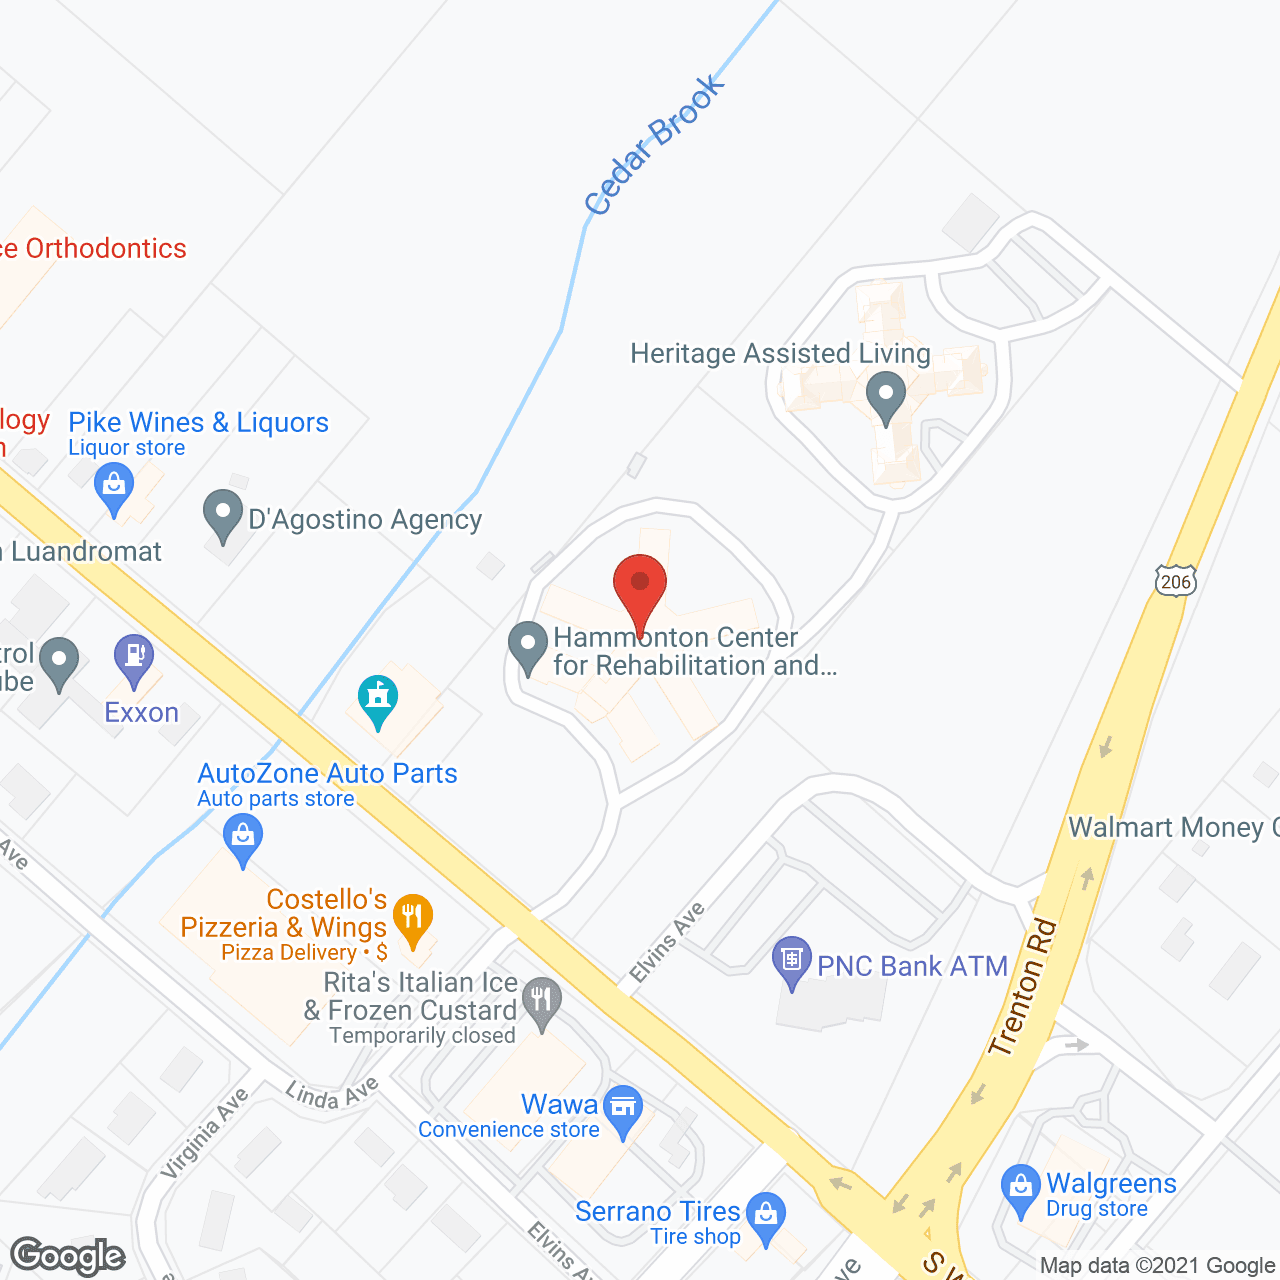 Hammonton Center for Rehabilitation and Nursing in google map